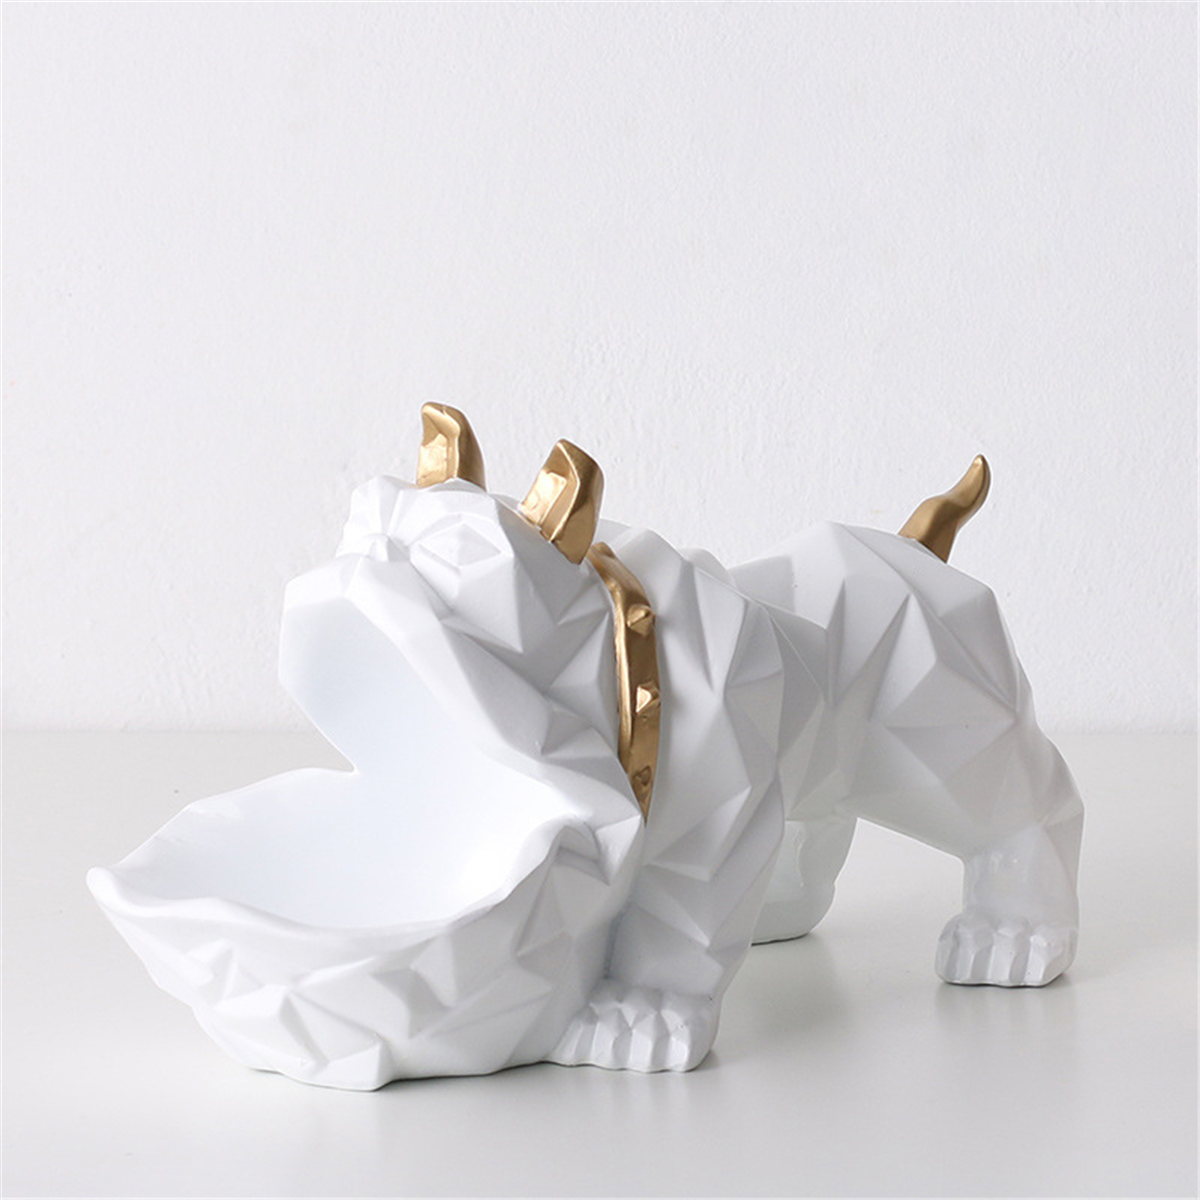 Bulldog-Animal-Sculpture-Puppy-Dog-Statue-Figure-Ornament-Gift-Decorations-1464229-2